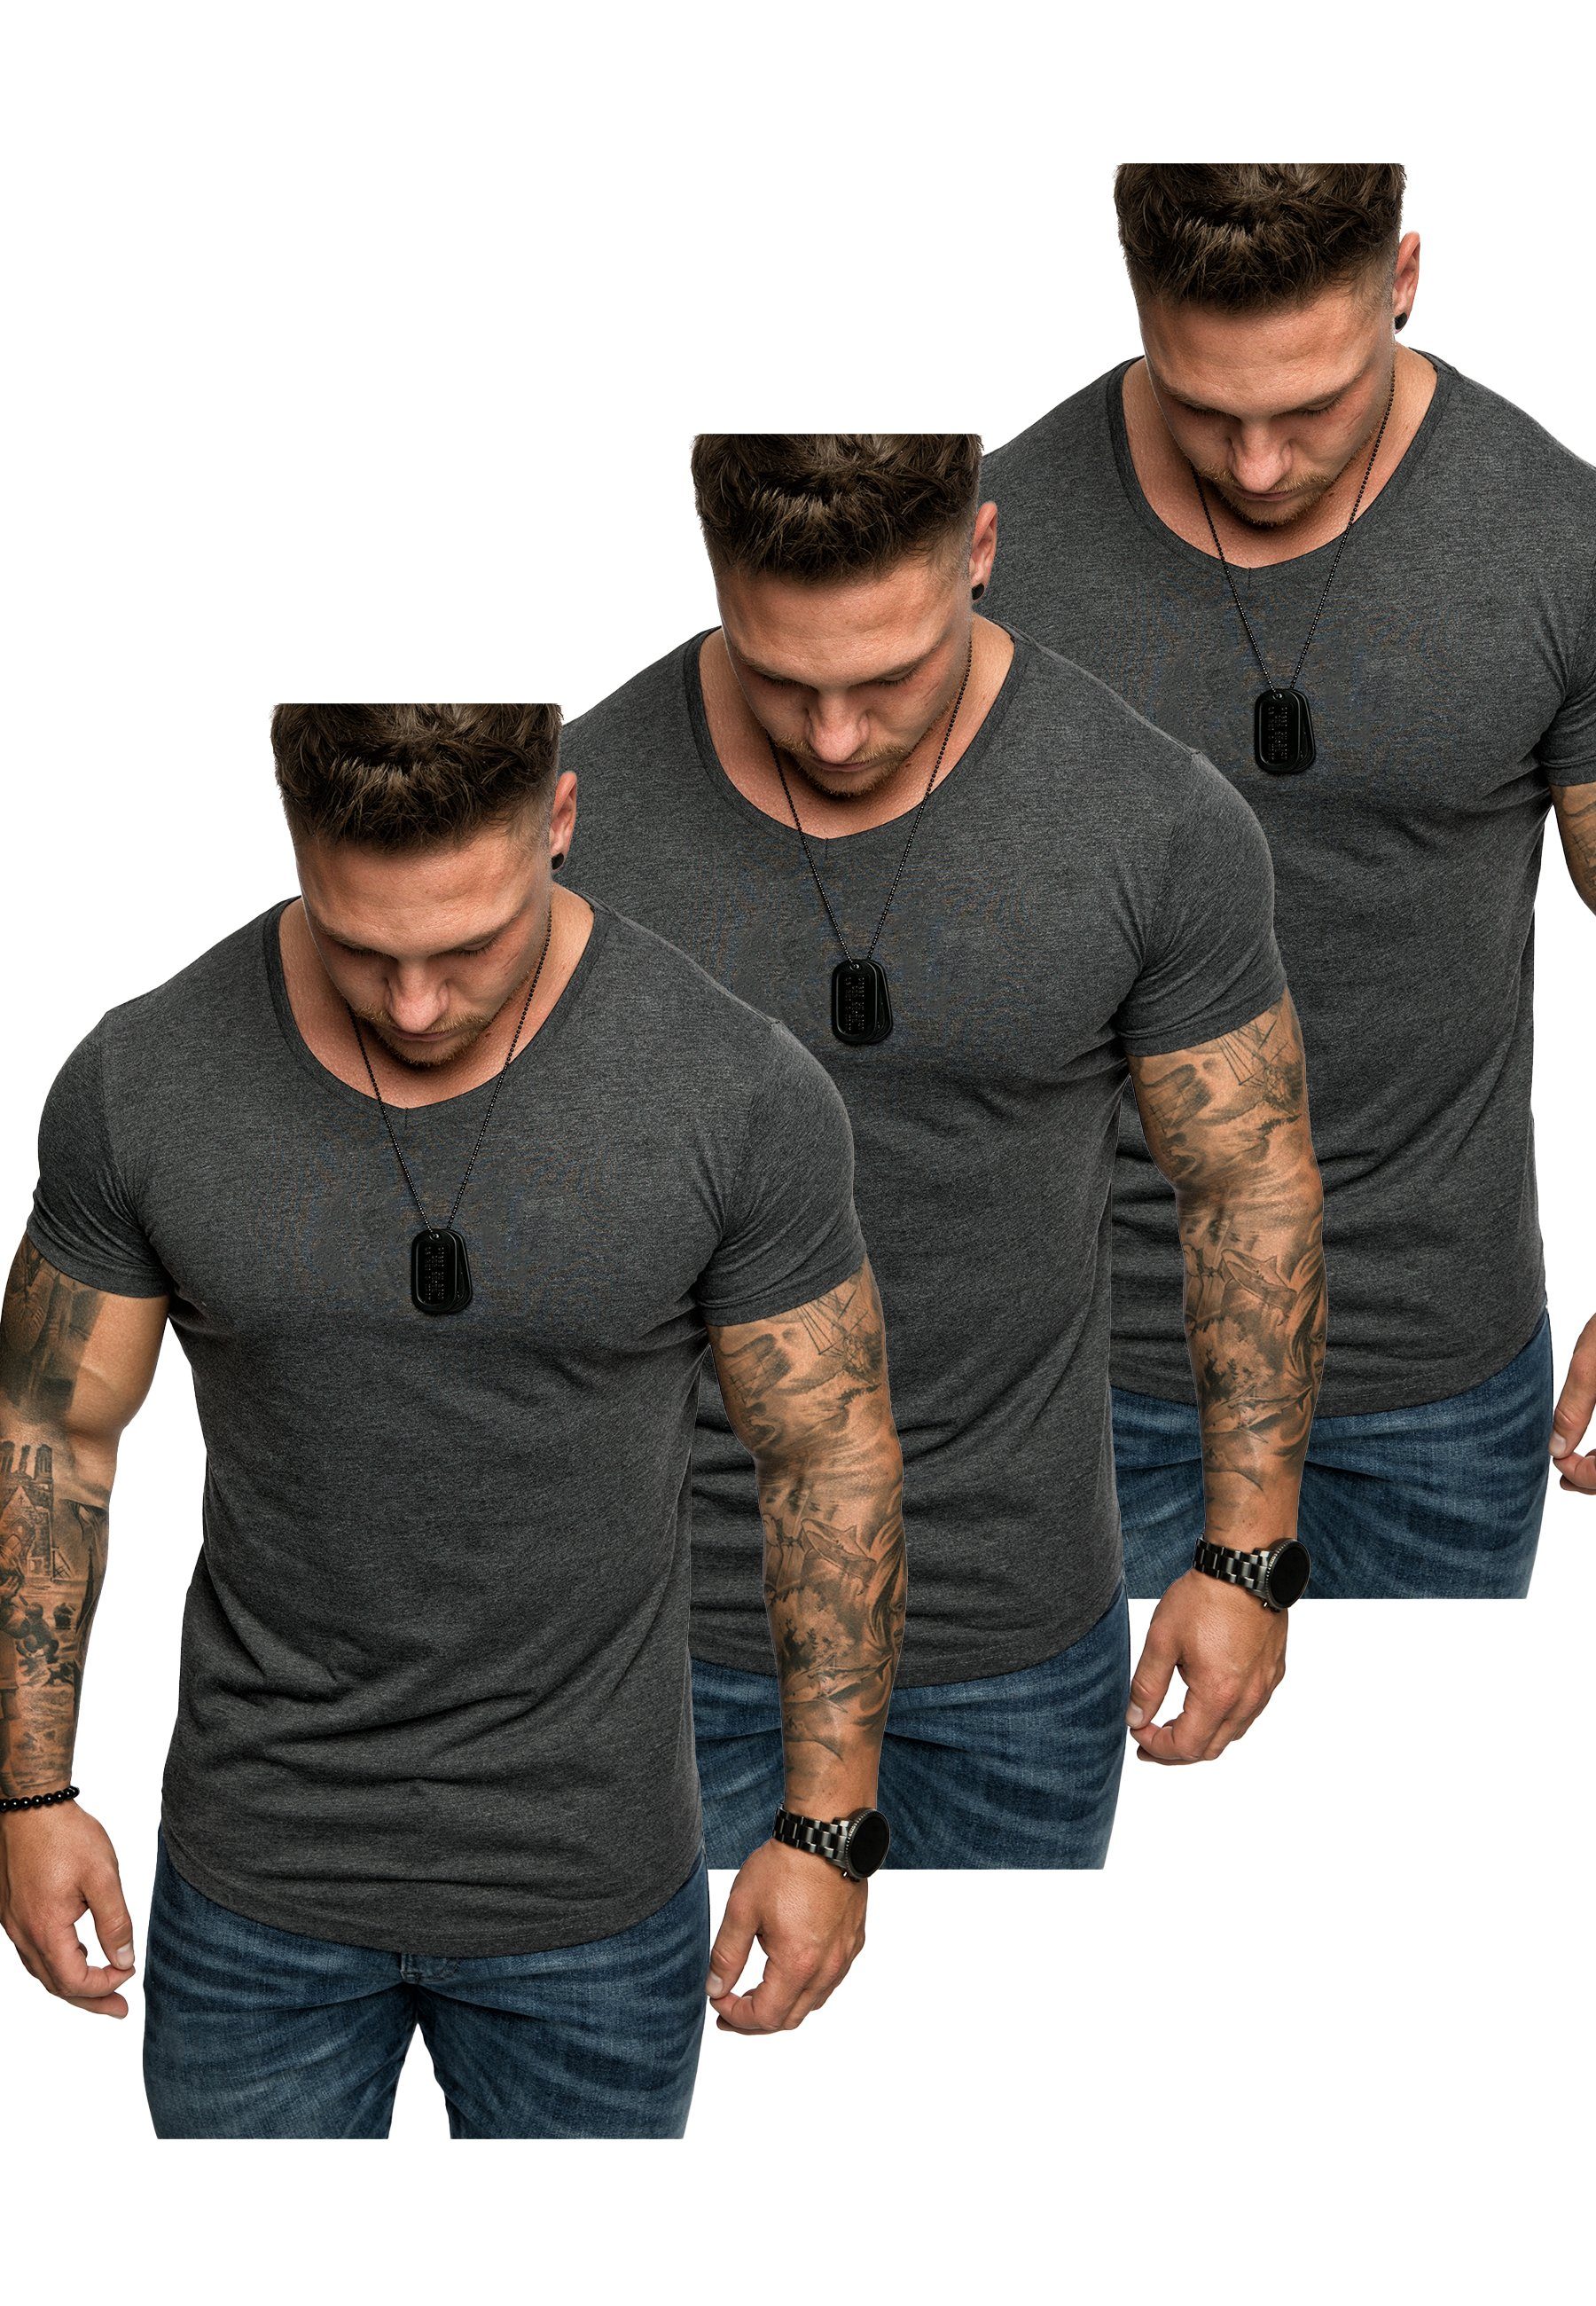 T-Shirt Herren T-Shirts BELLEVUE Amaci&Sons Oversize 3er-Pack (3x mit V-Ausschnitt (3er-Pack) 3. T-Shirt Basic Anthrazit)